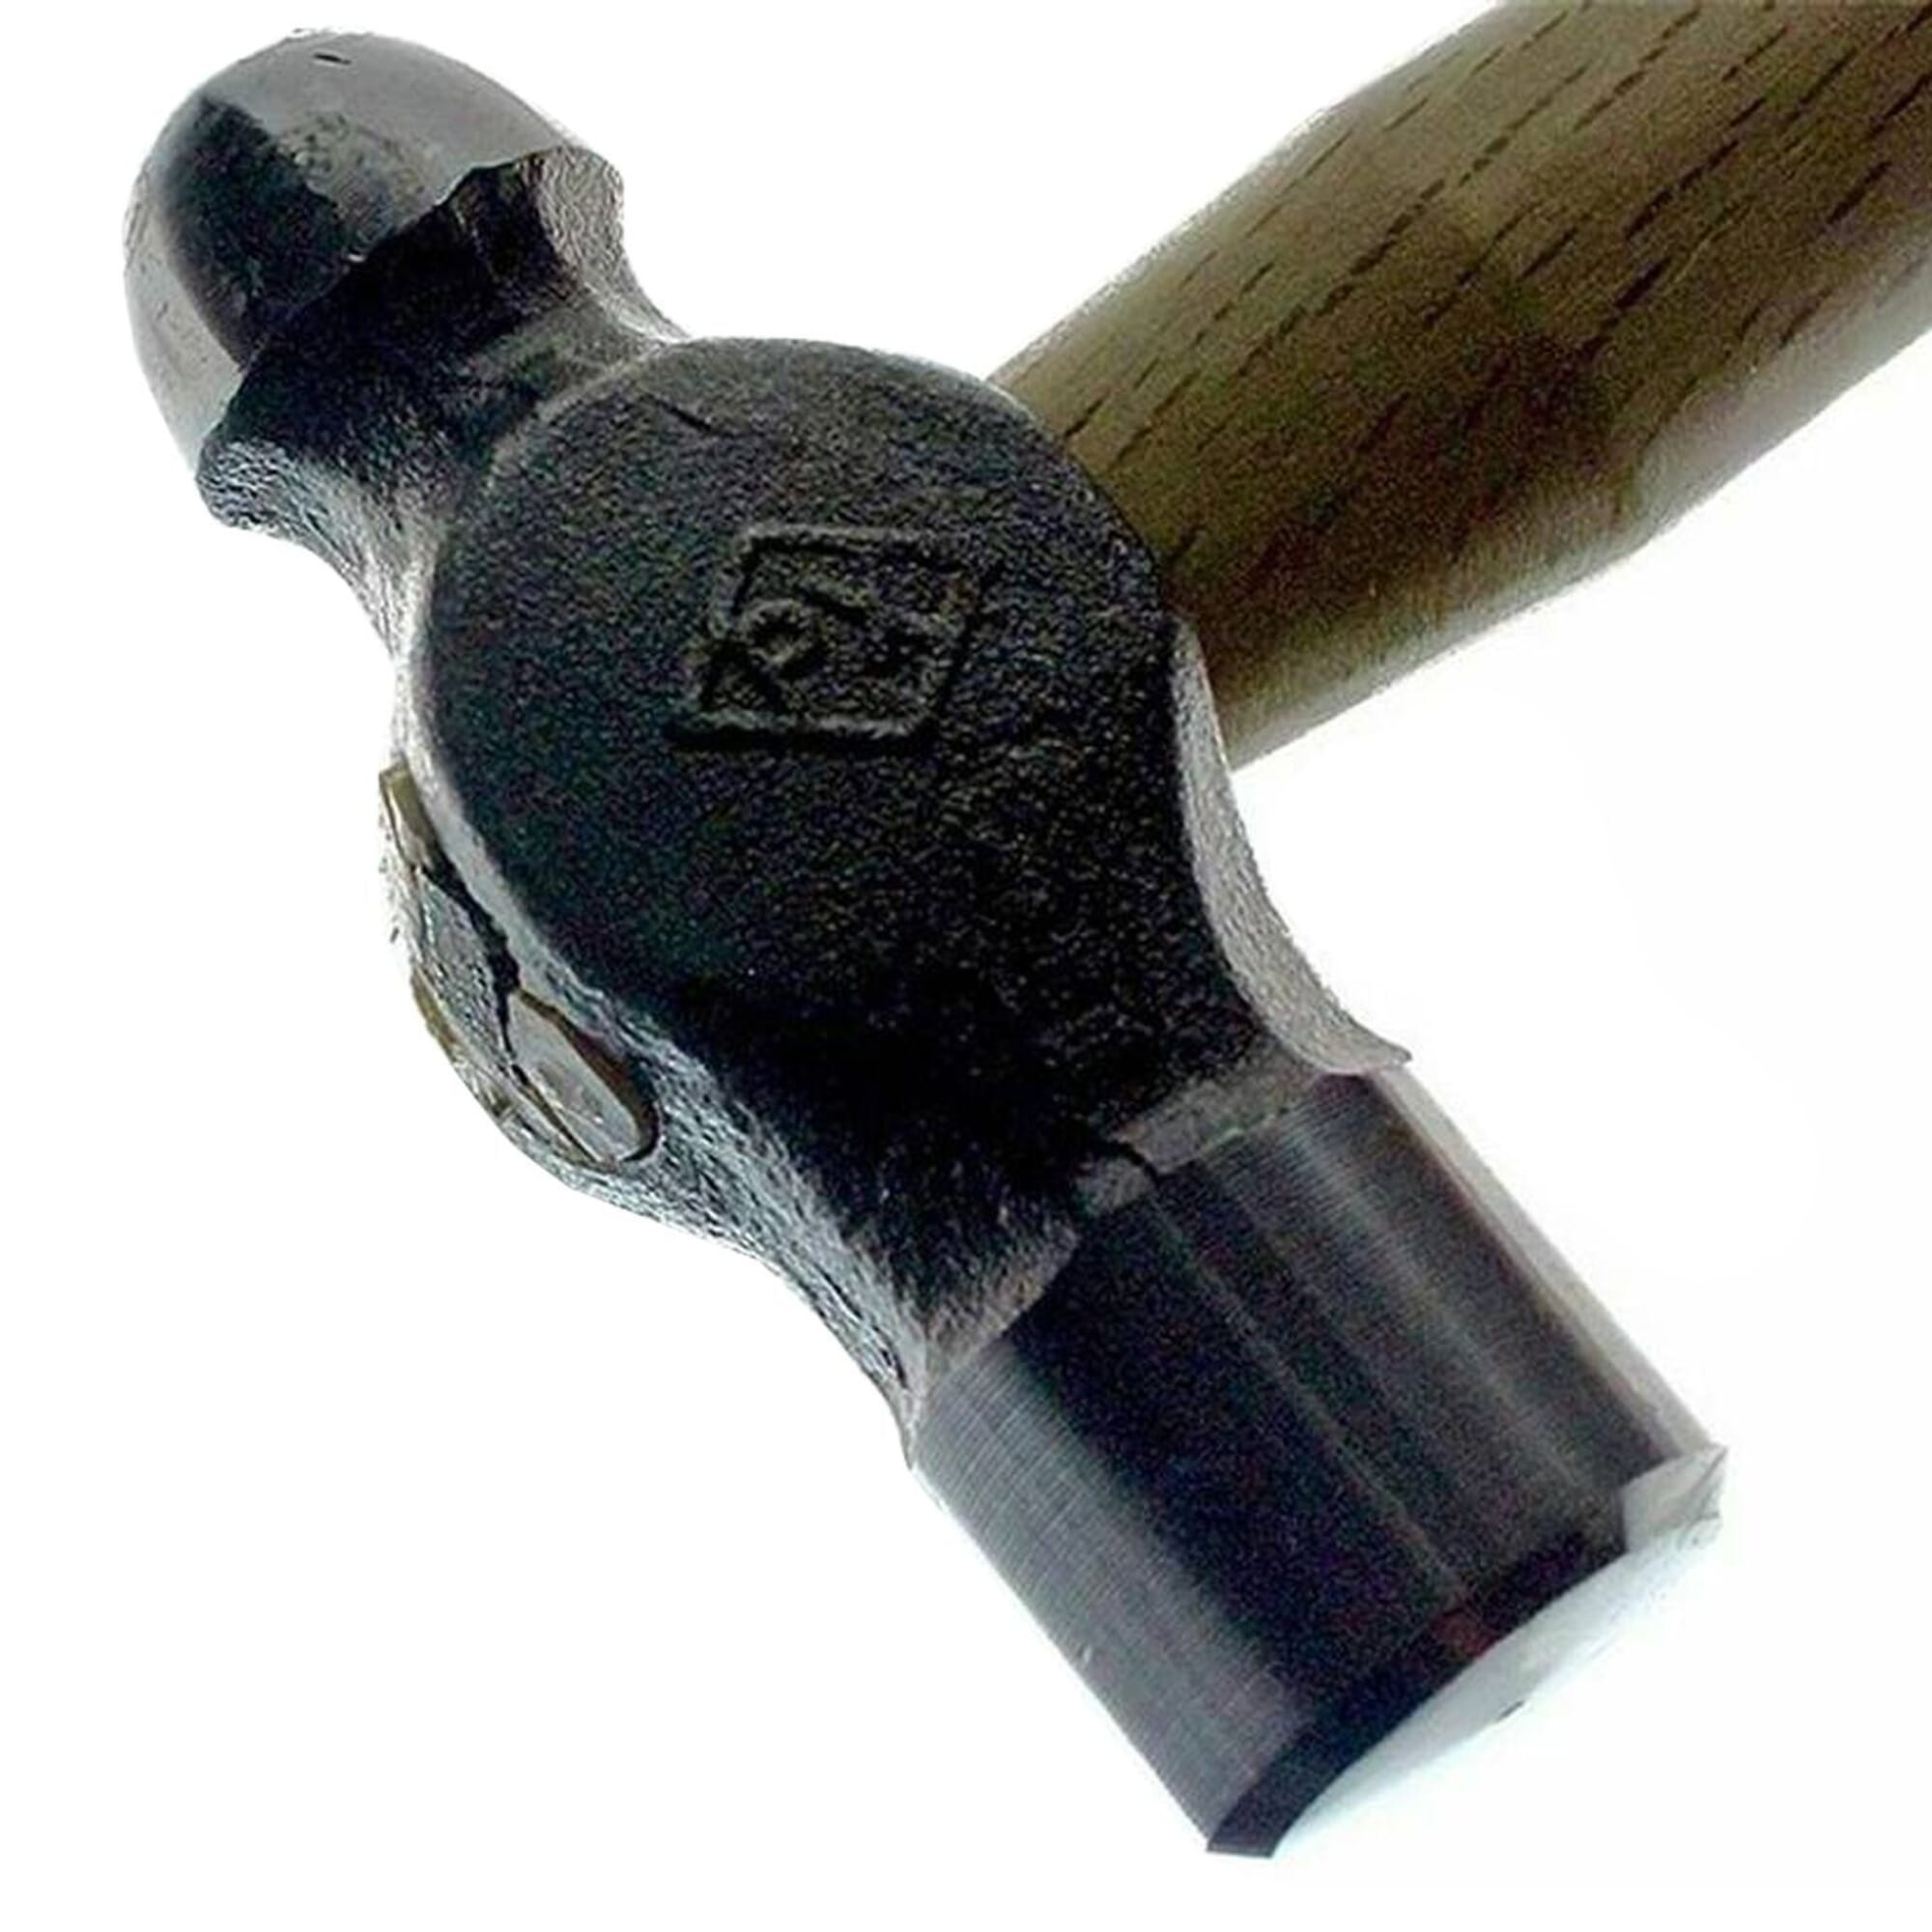 O.H Kogyo HK-05PX Ball-Peen Ball Pein Machinist Hammer Peening Metalworking  250g for Metalwork, Smoothing Rivet Edges, & Mate Gaskets